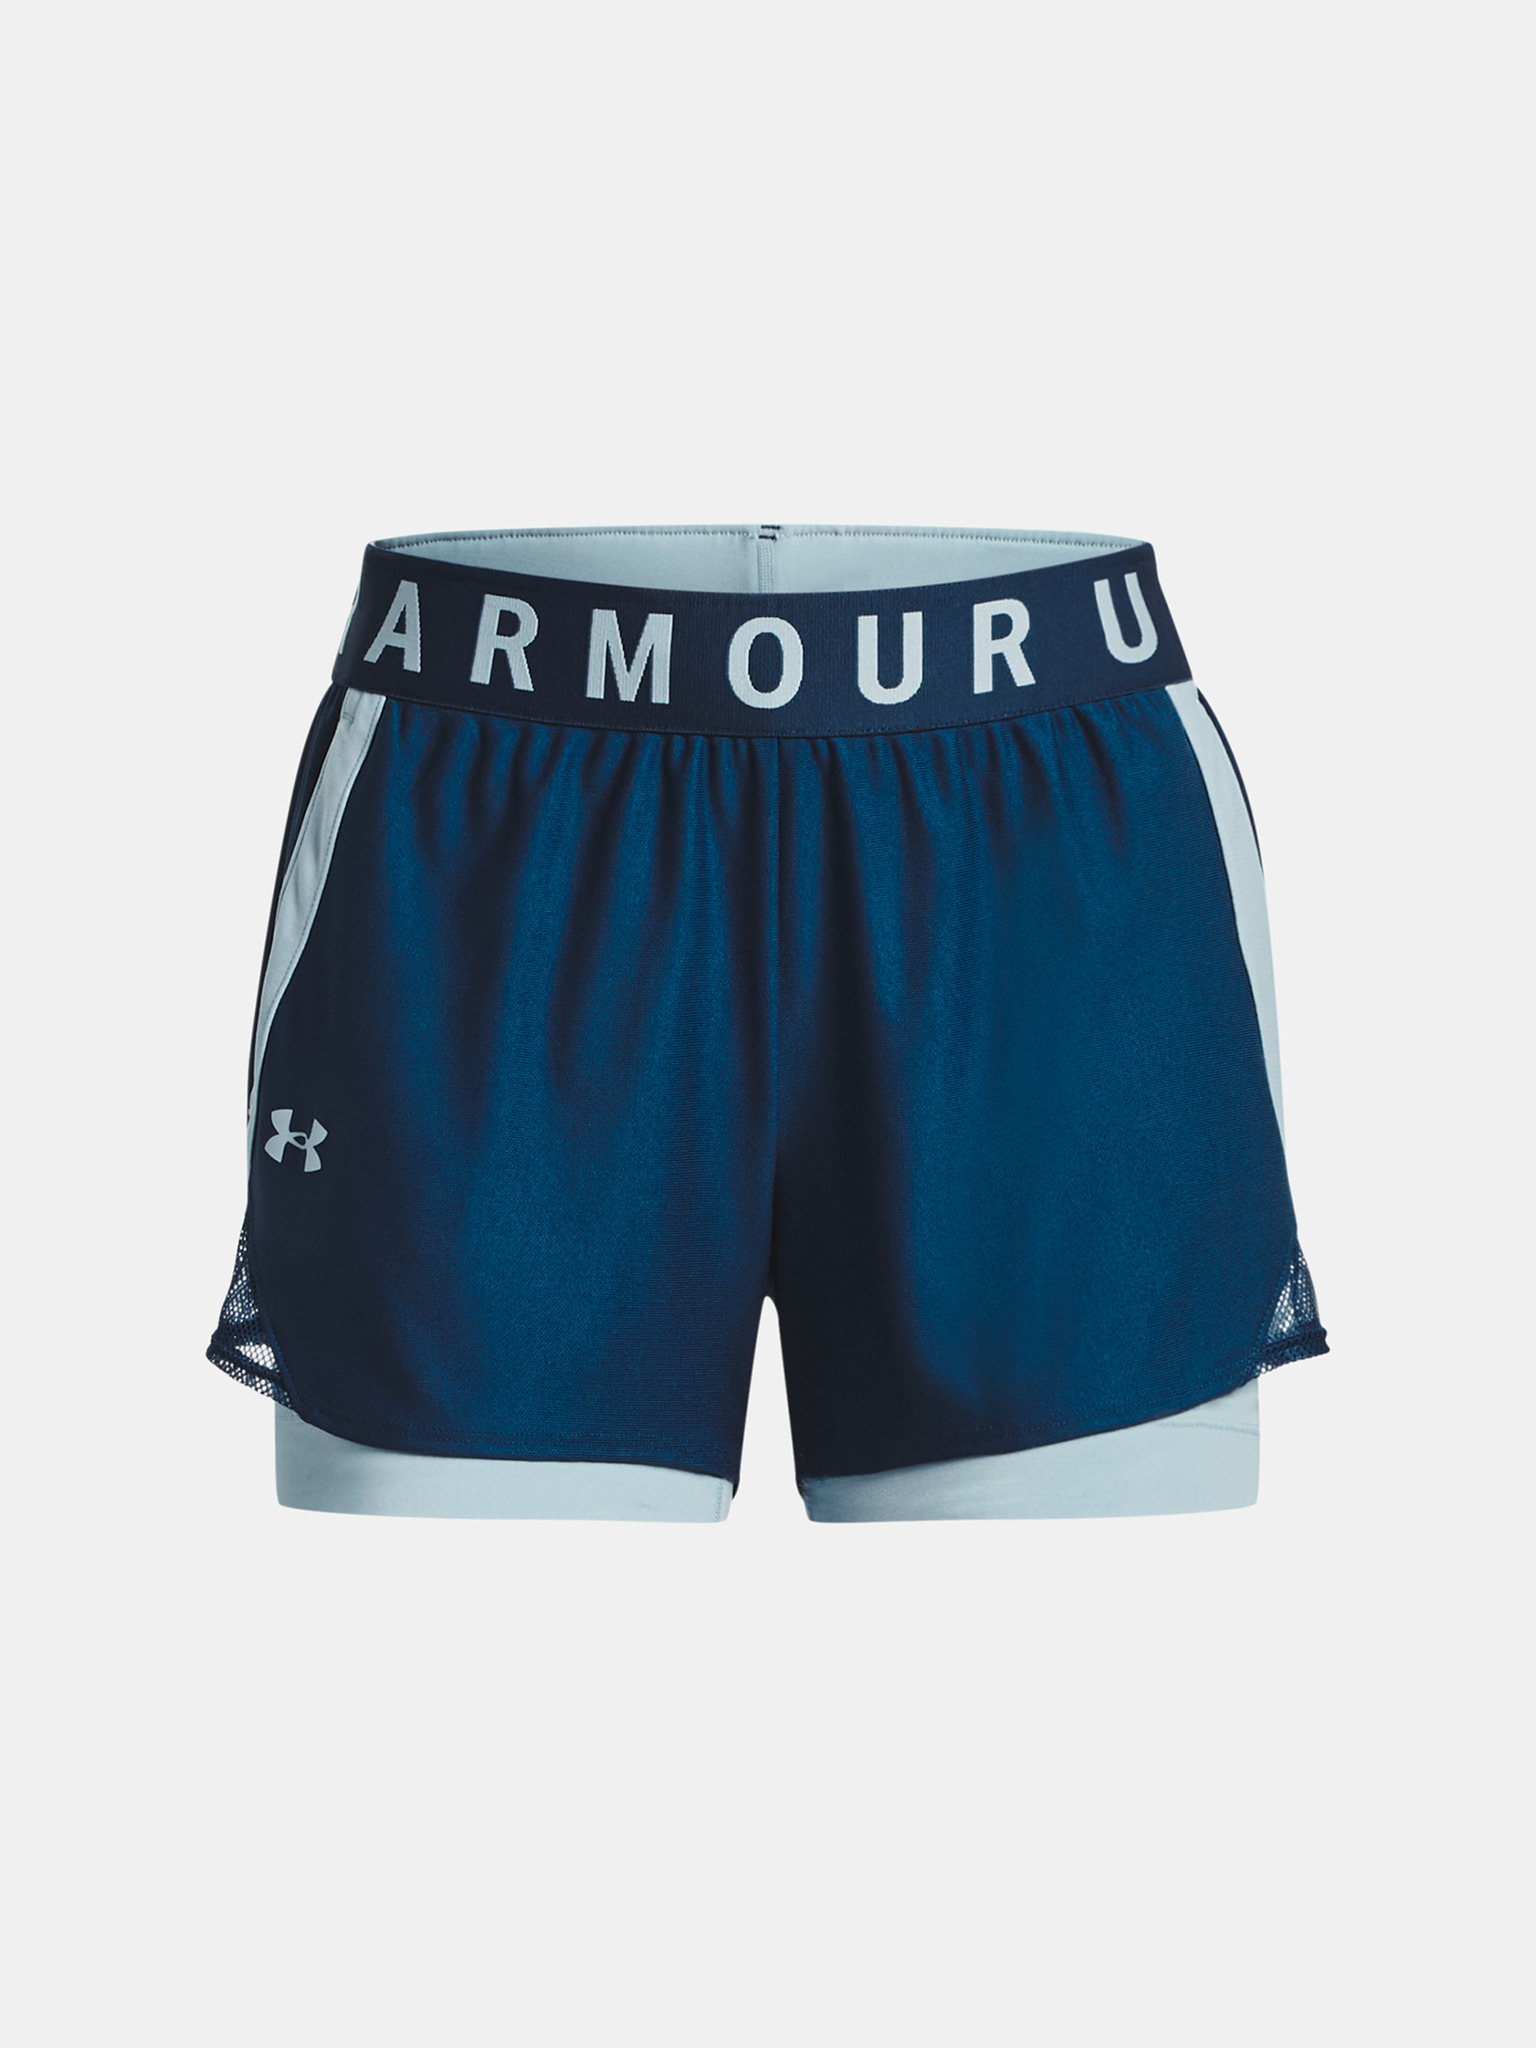 Under Armour Blue Short Shorts for Women